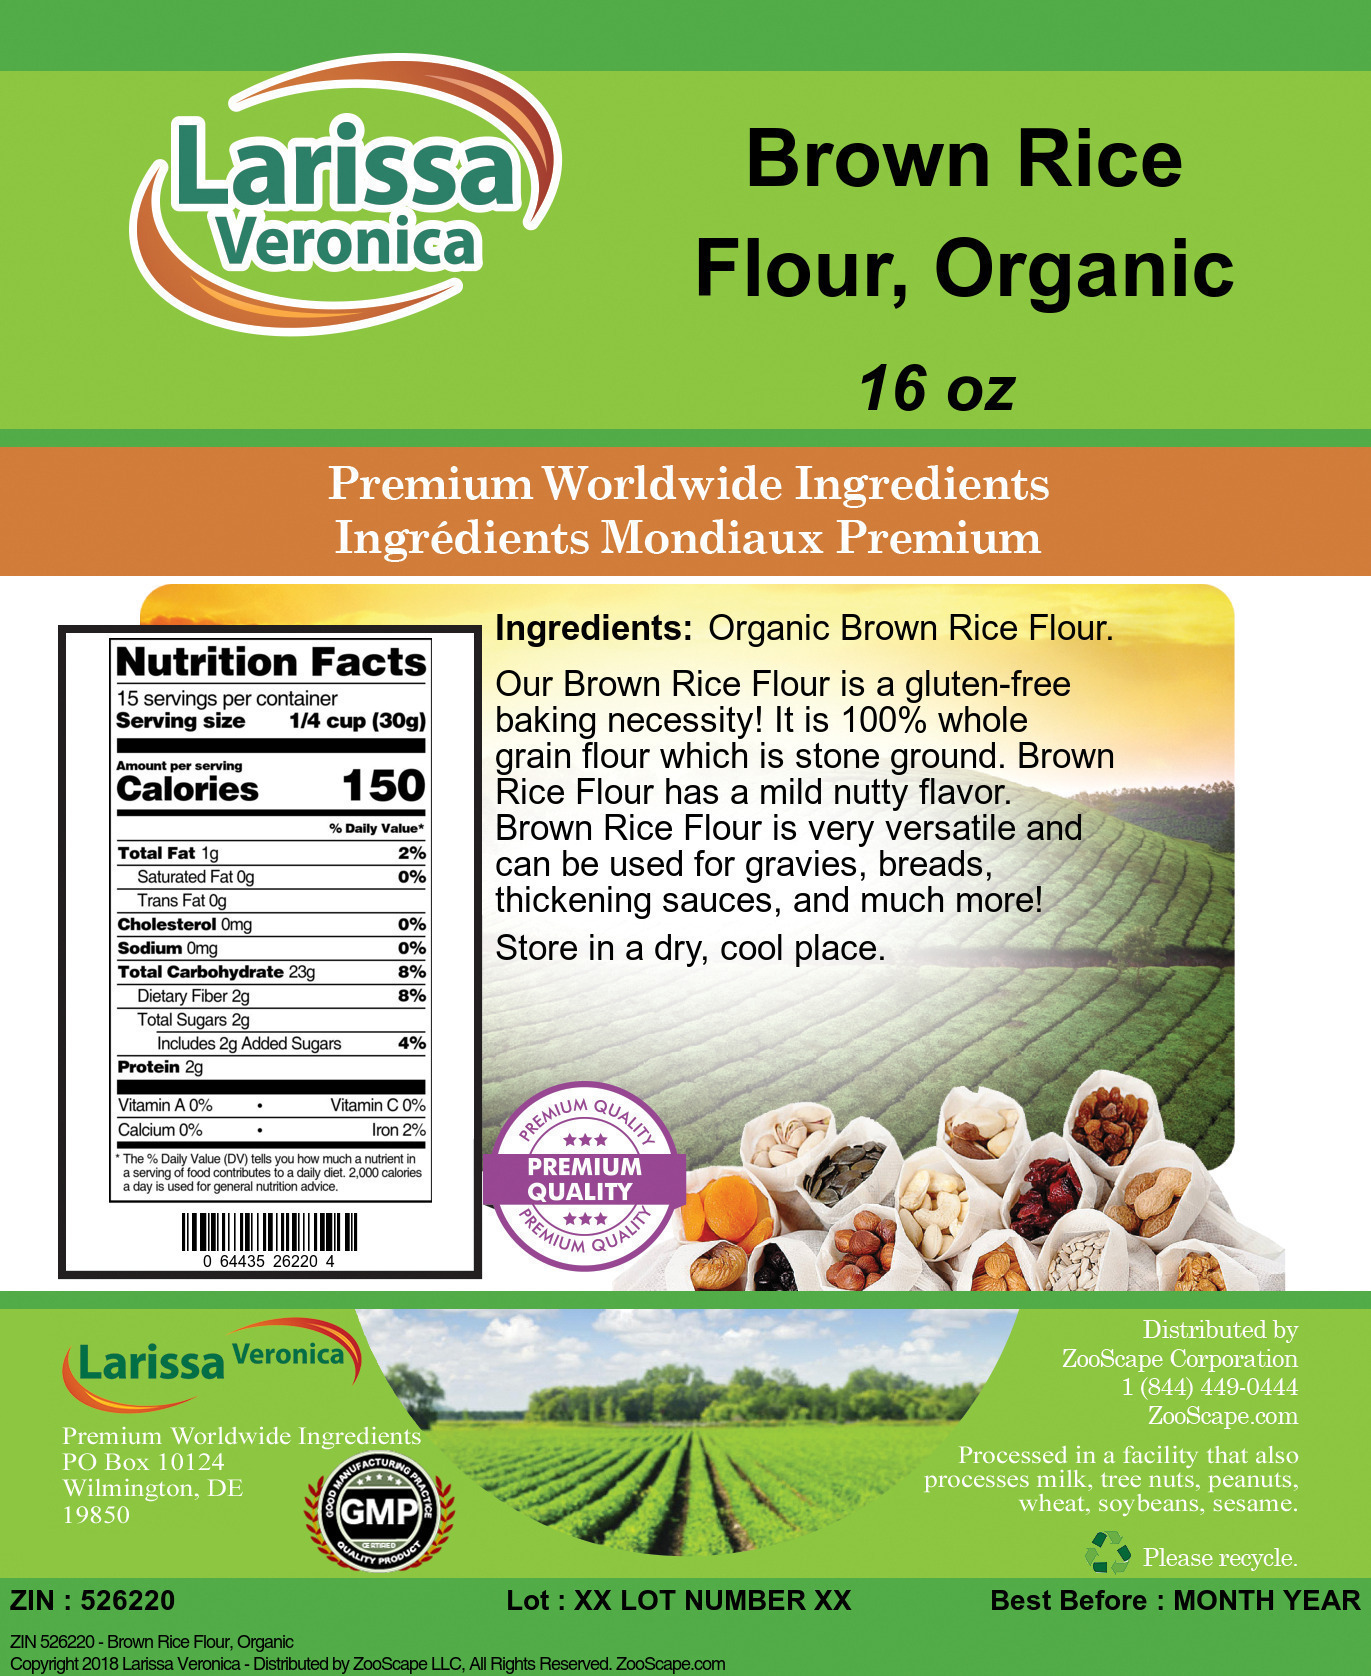 Brown Rice Flour, Organic - Label